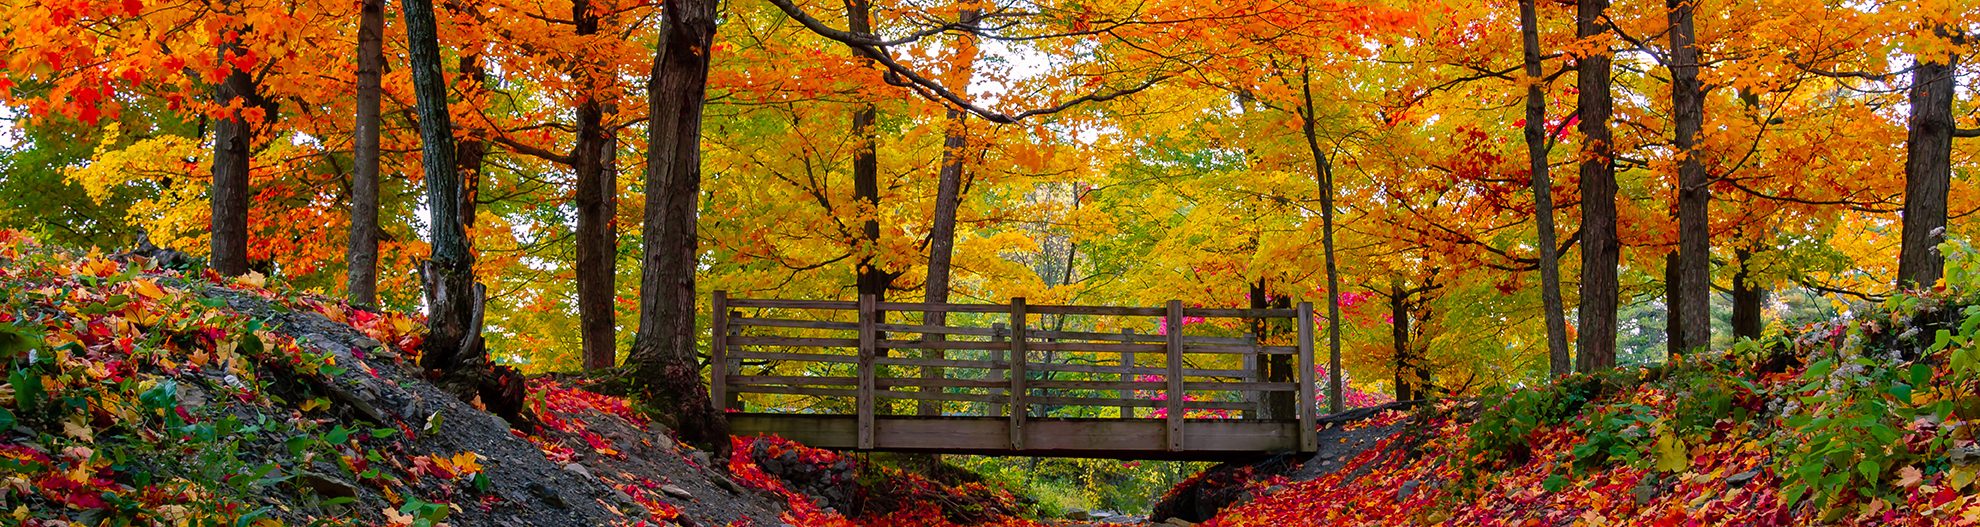 Fall Trees Surrounding Wooden Bridge